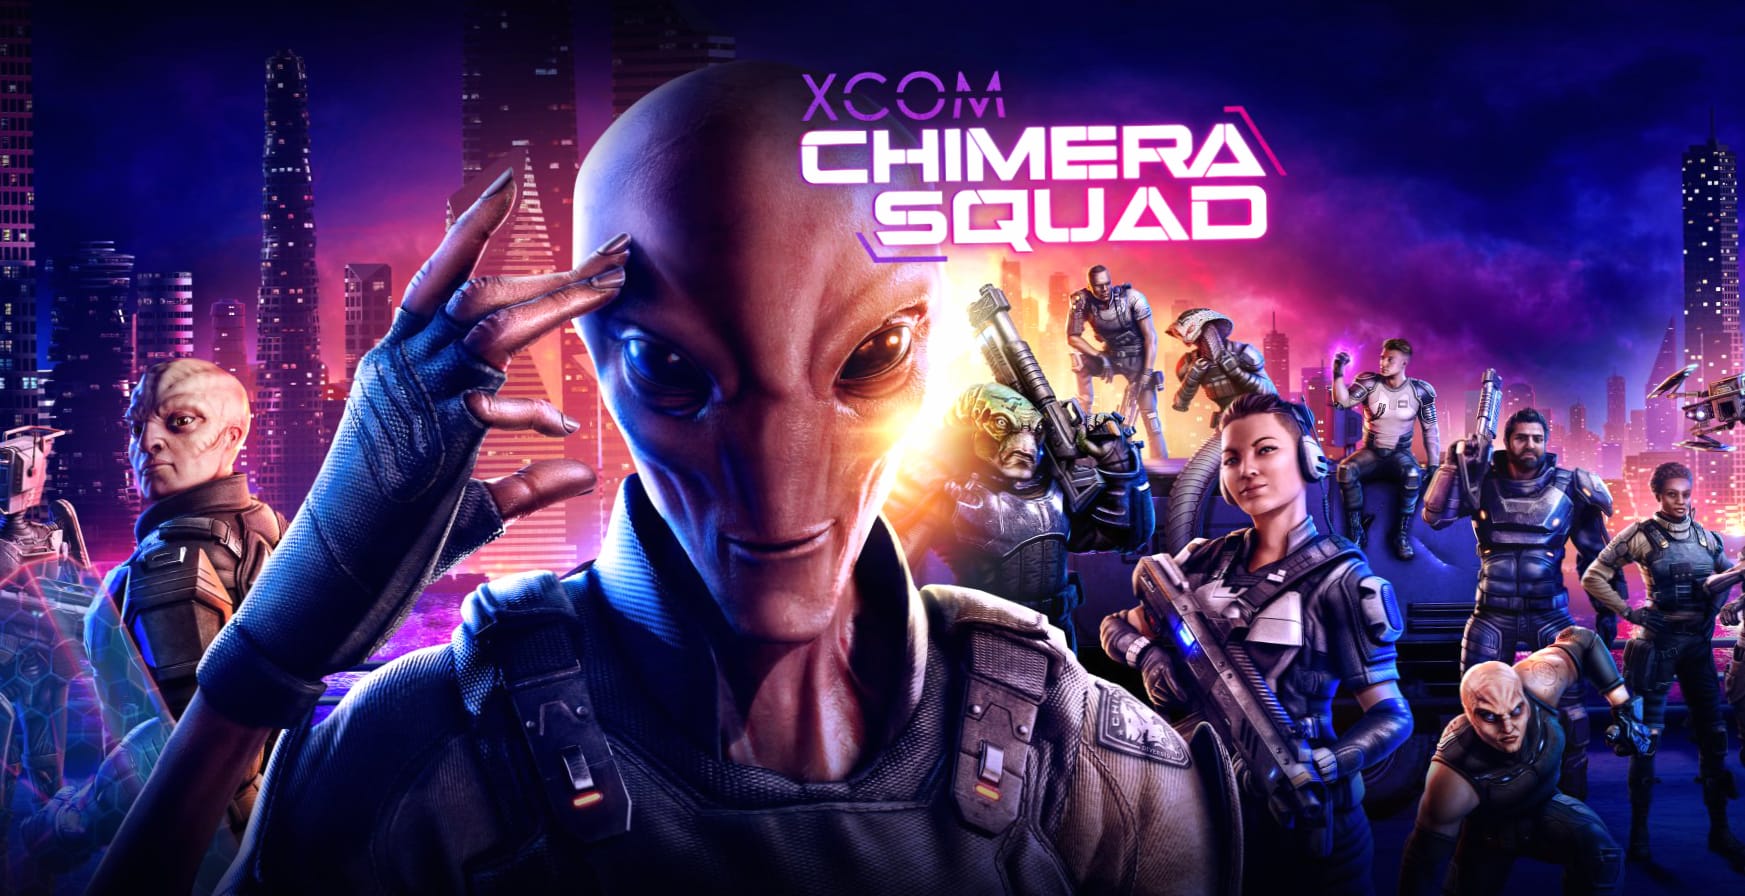 XCOM Chimera Squad at 1280 x 960 size wallpapers HD quality